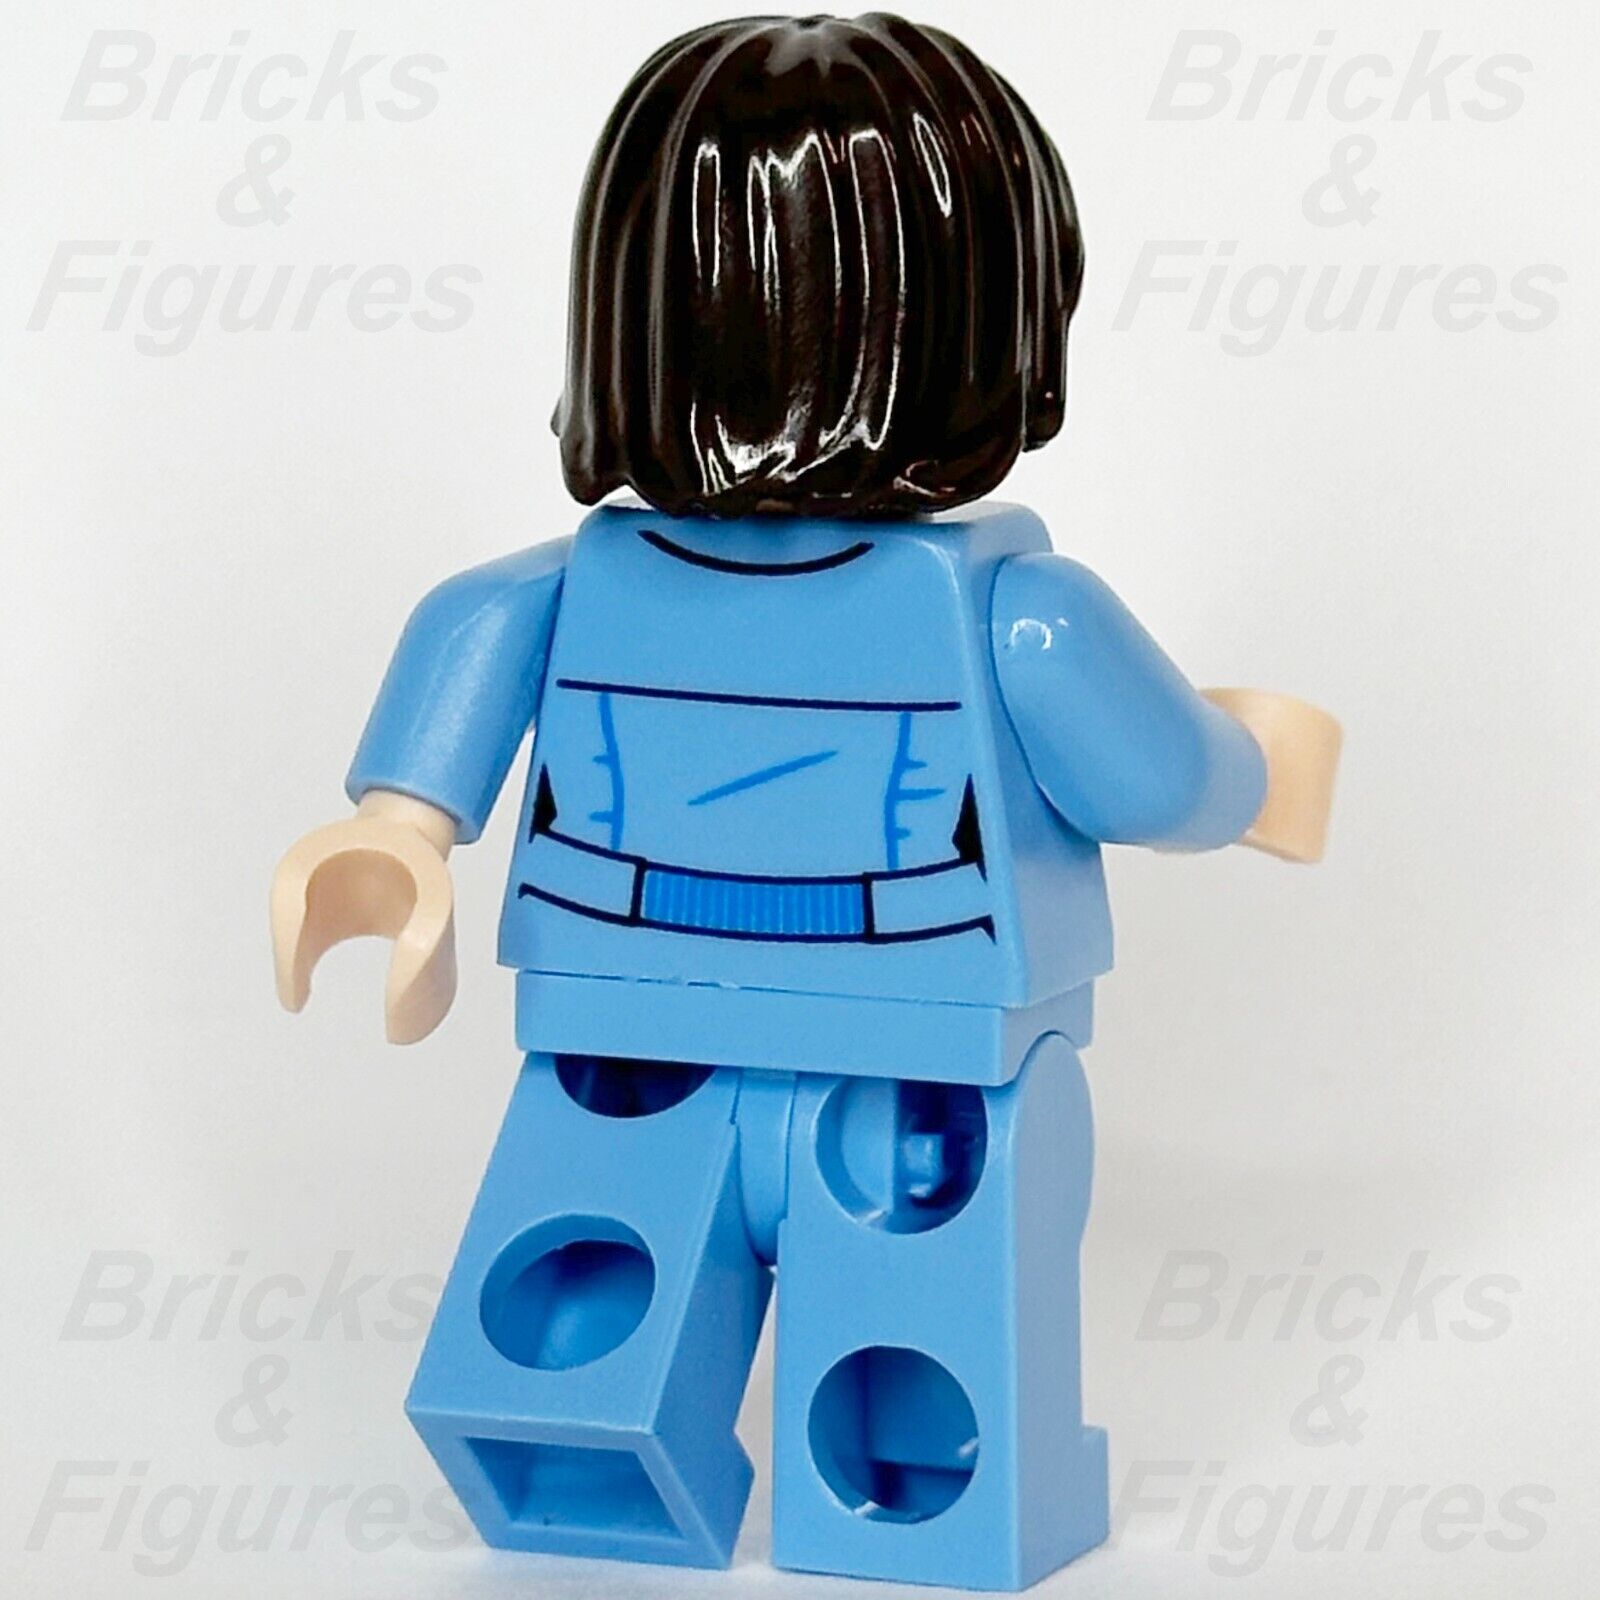 LEGO Ideas Sally Ride Minifigure Astronaut Women of NASA Minifig 21312 idea037 - Bricks & Figures